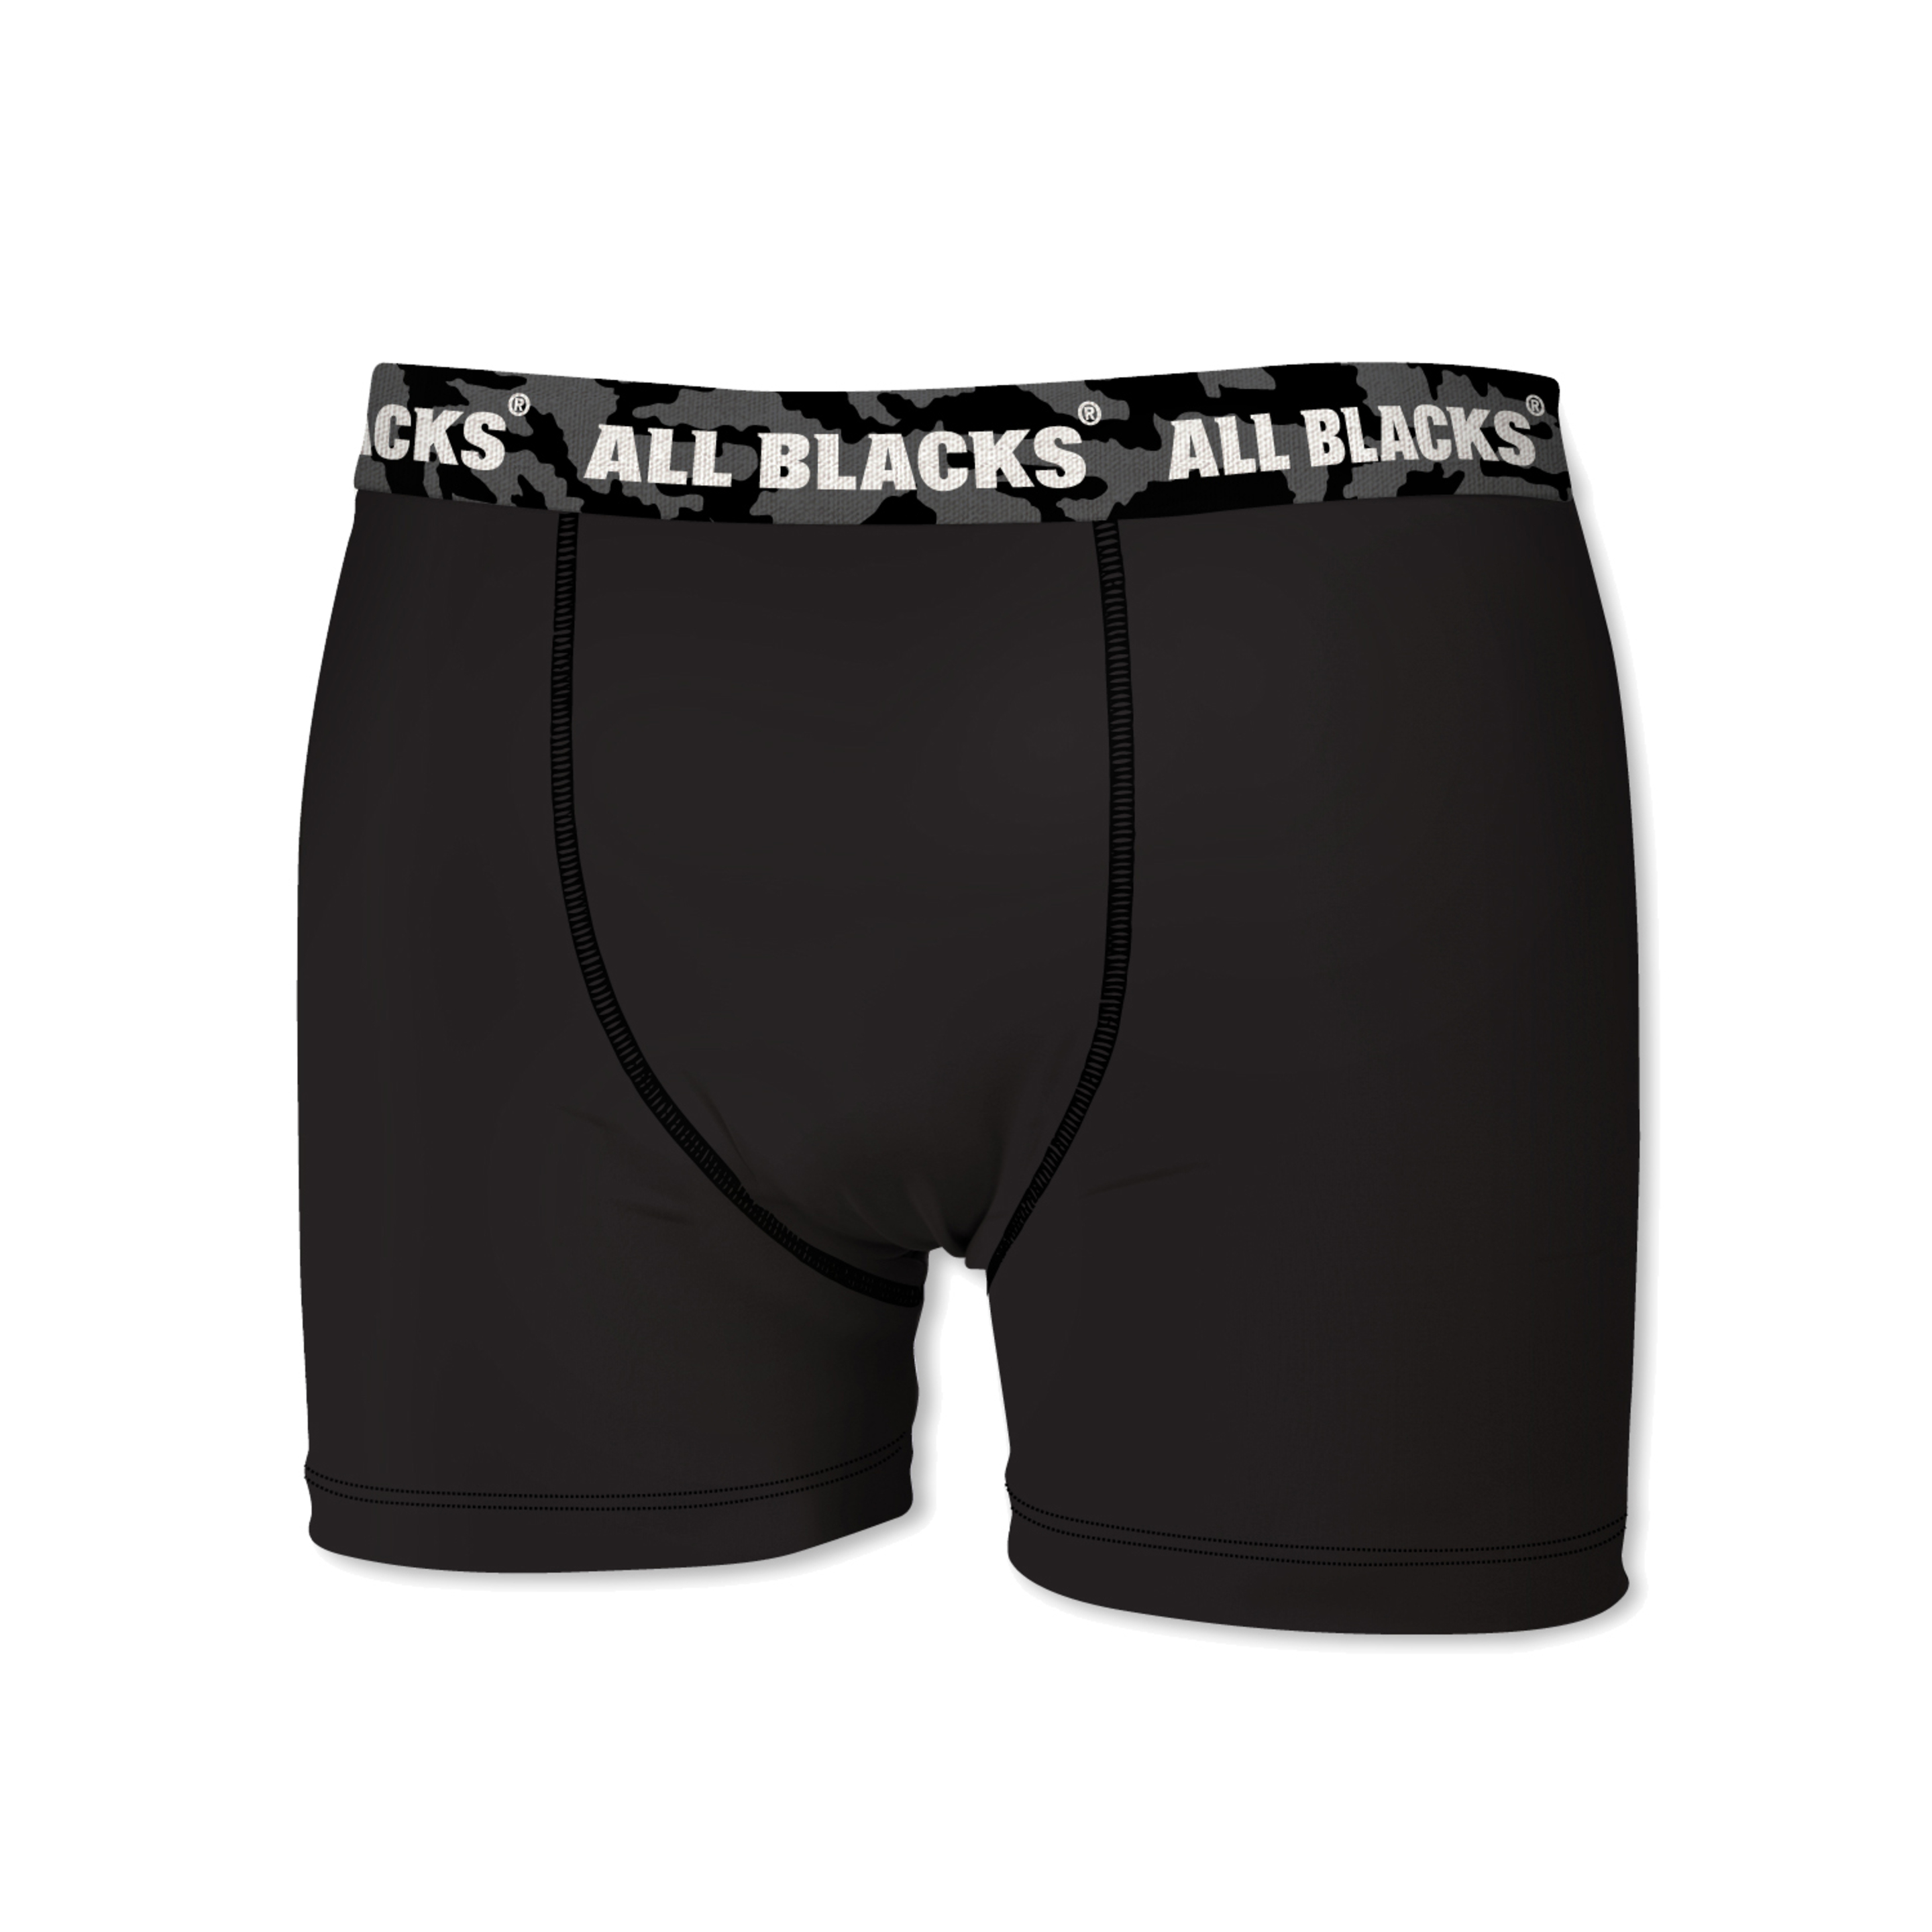 Calzoncillos All Blacks - negro - 